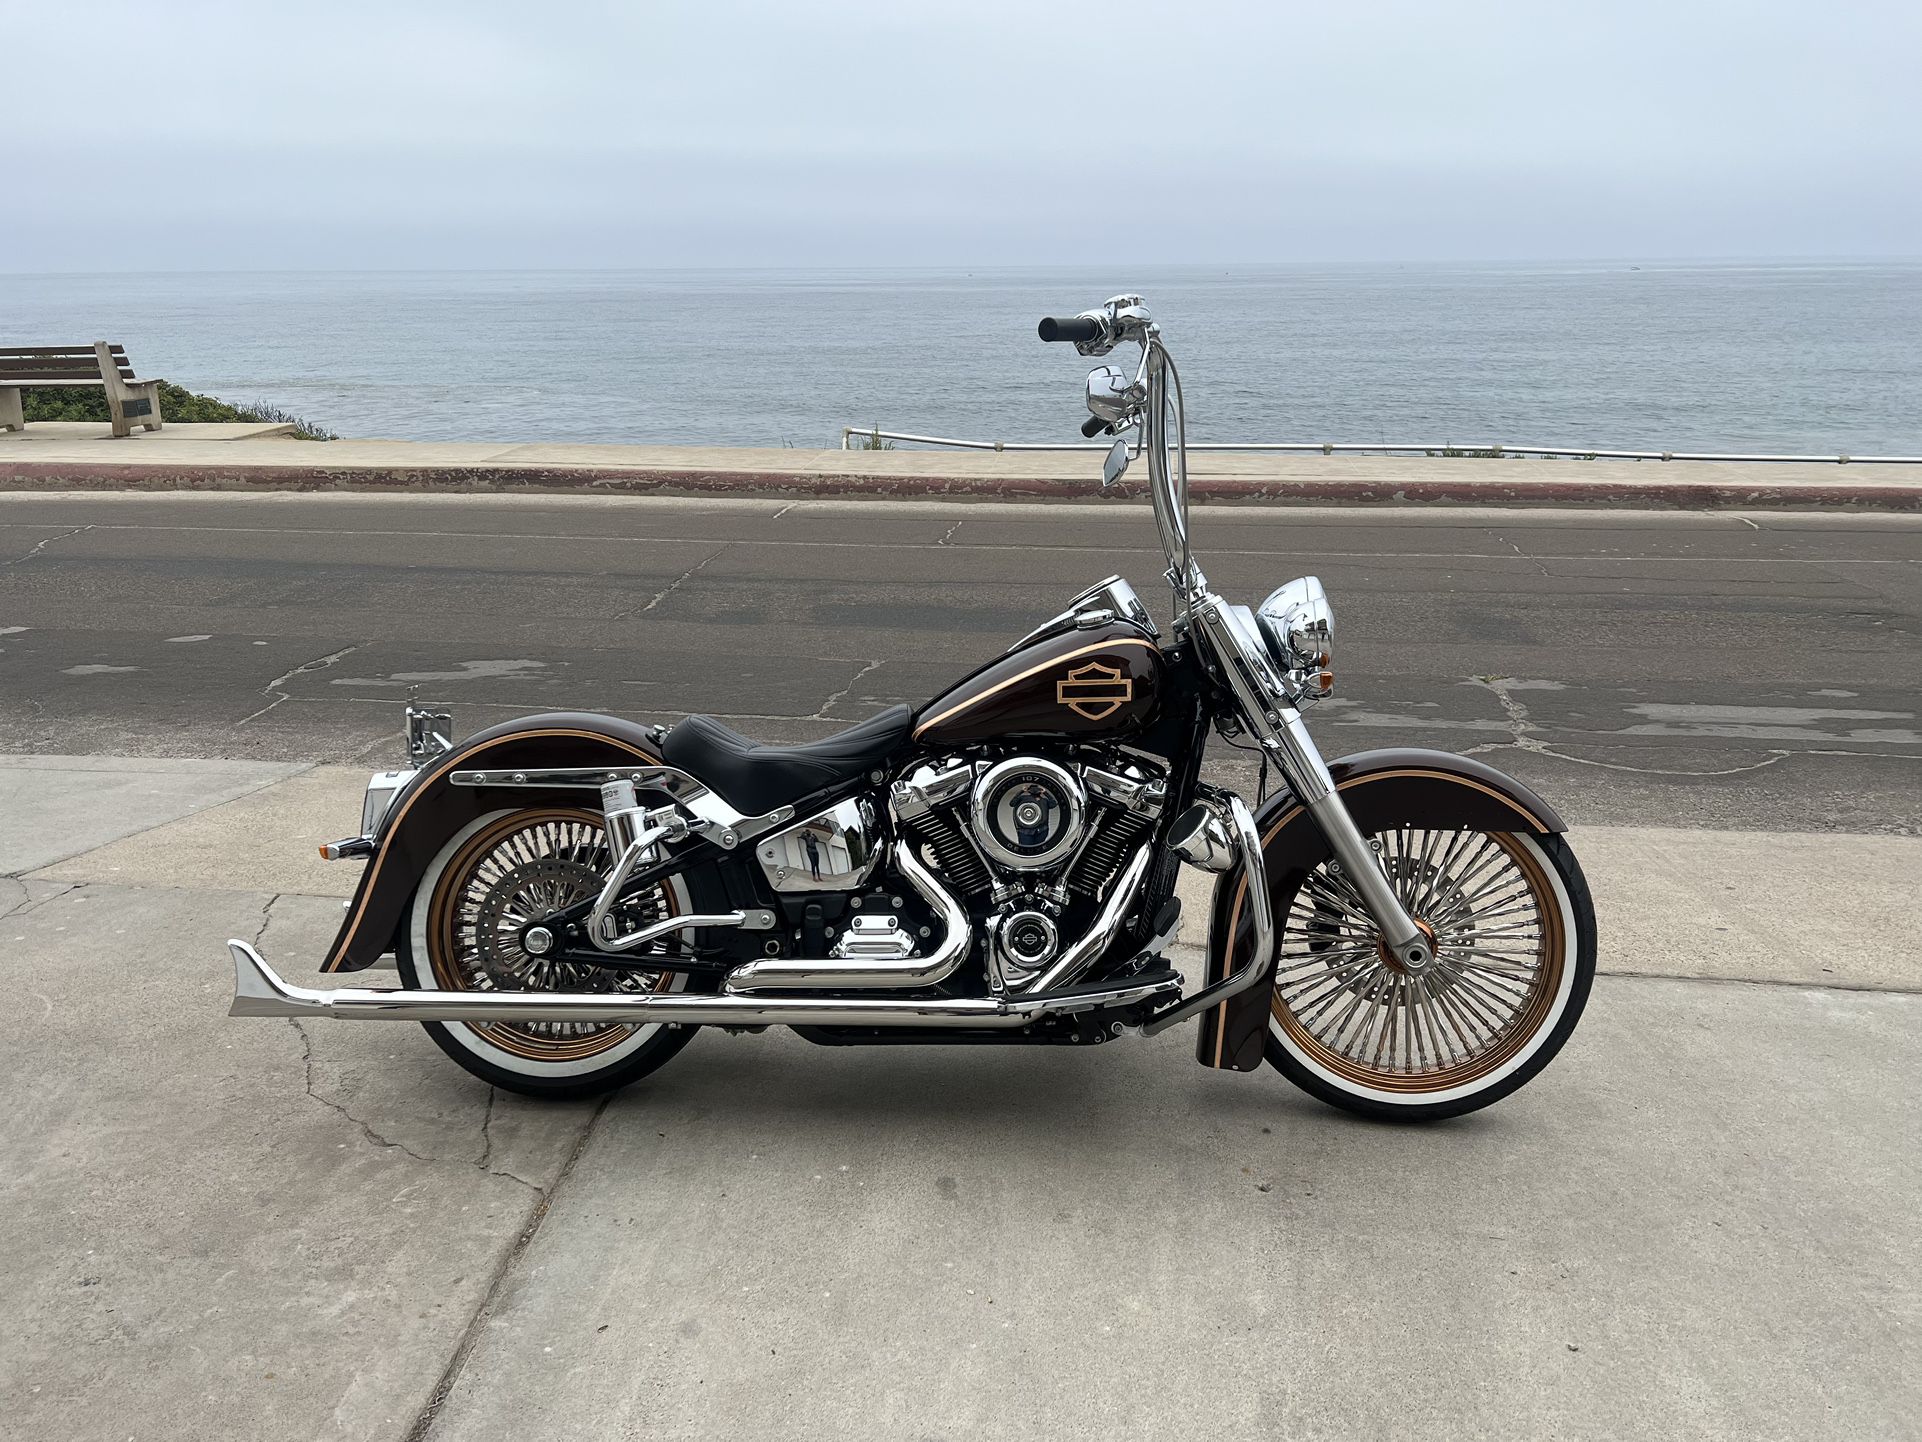 2019 Harley Davidson Softail deluxe